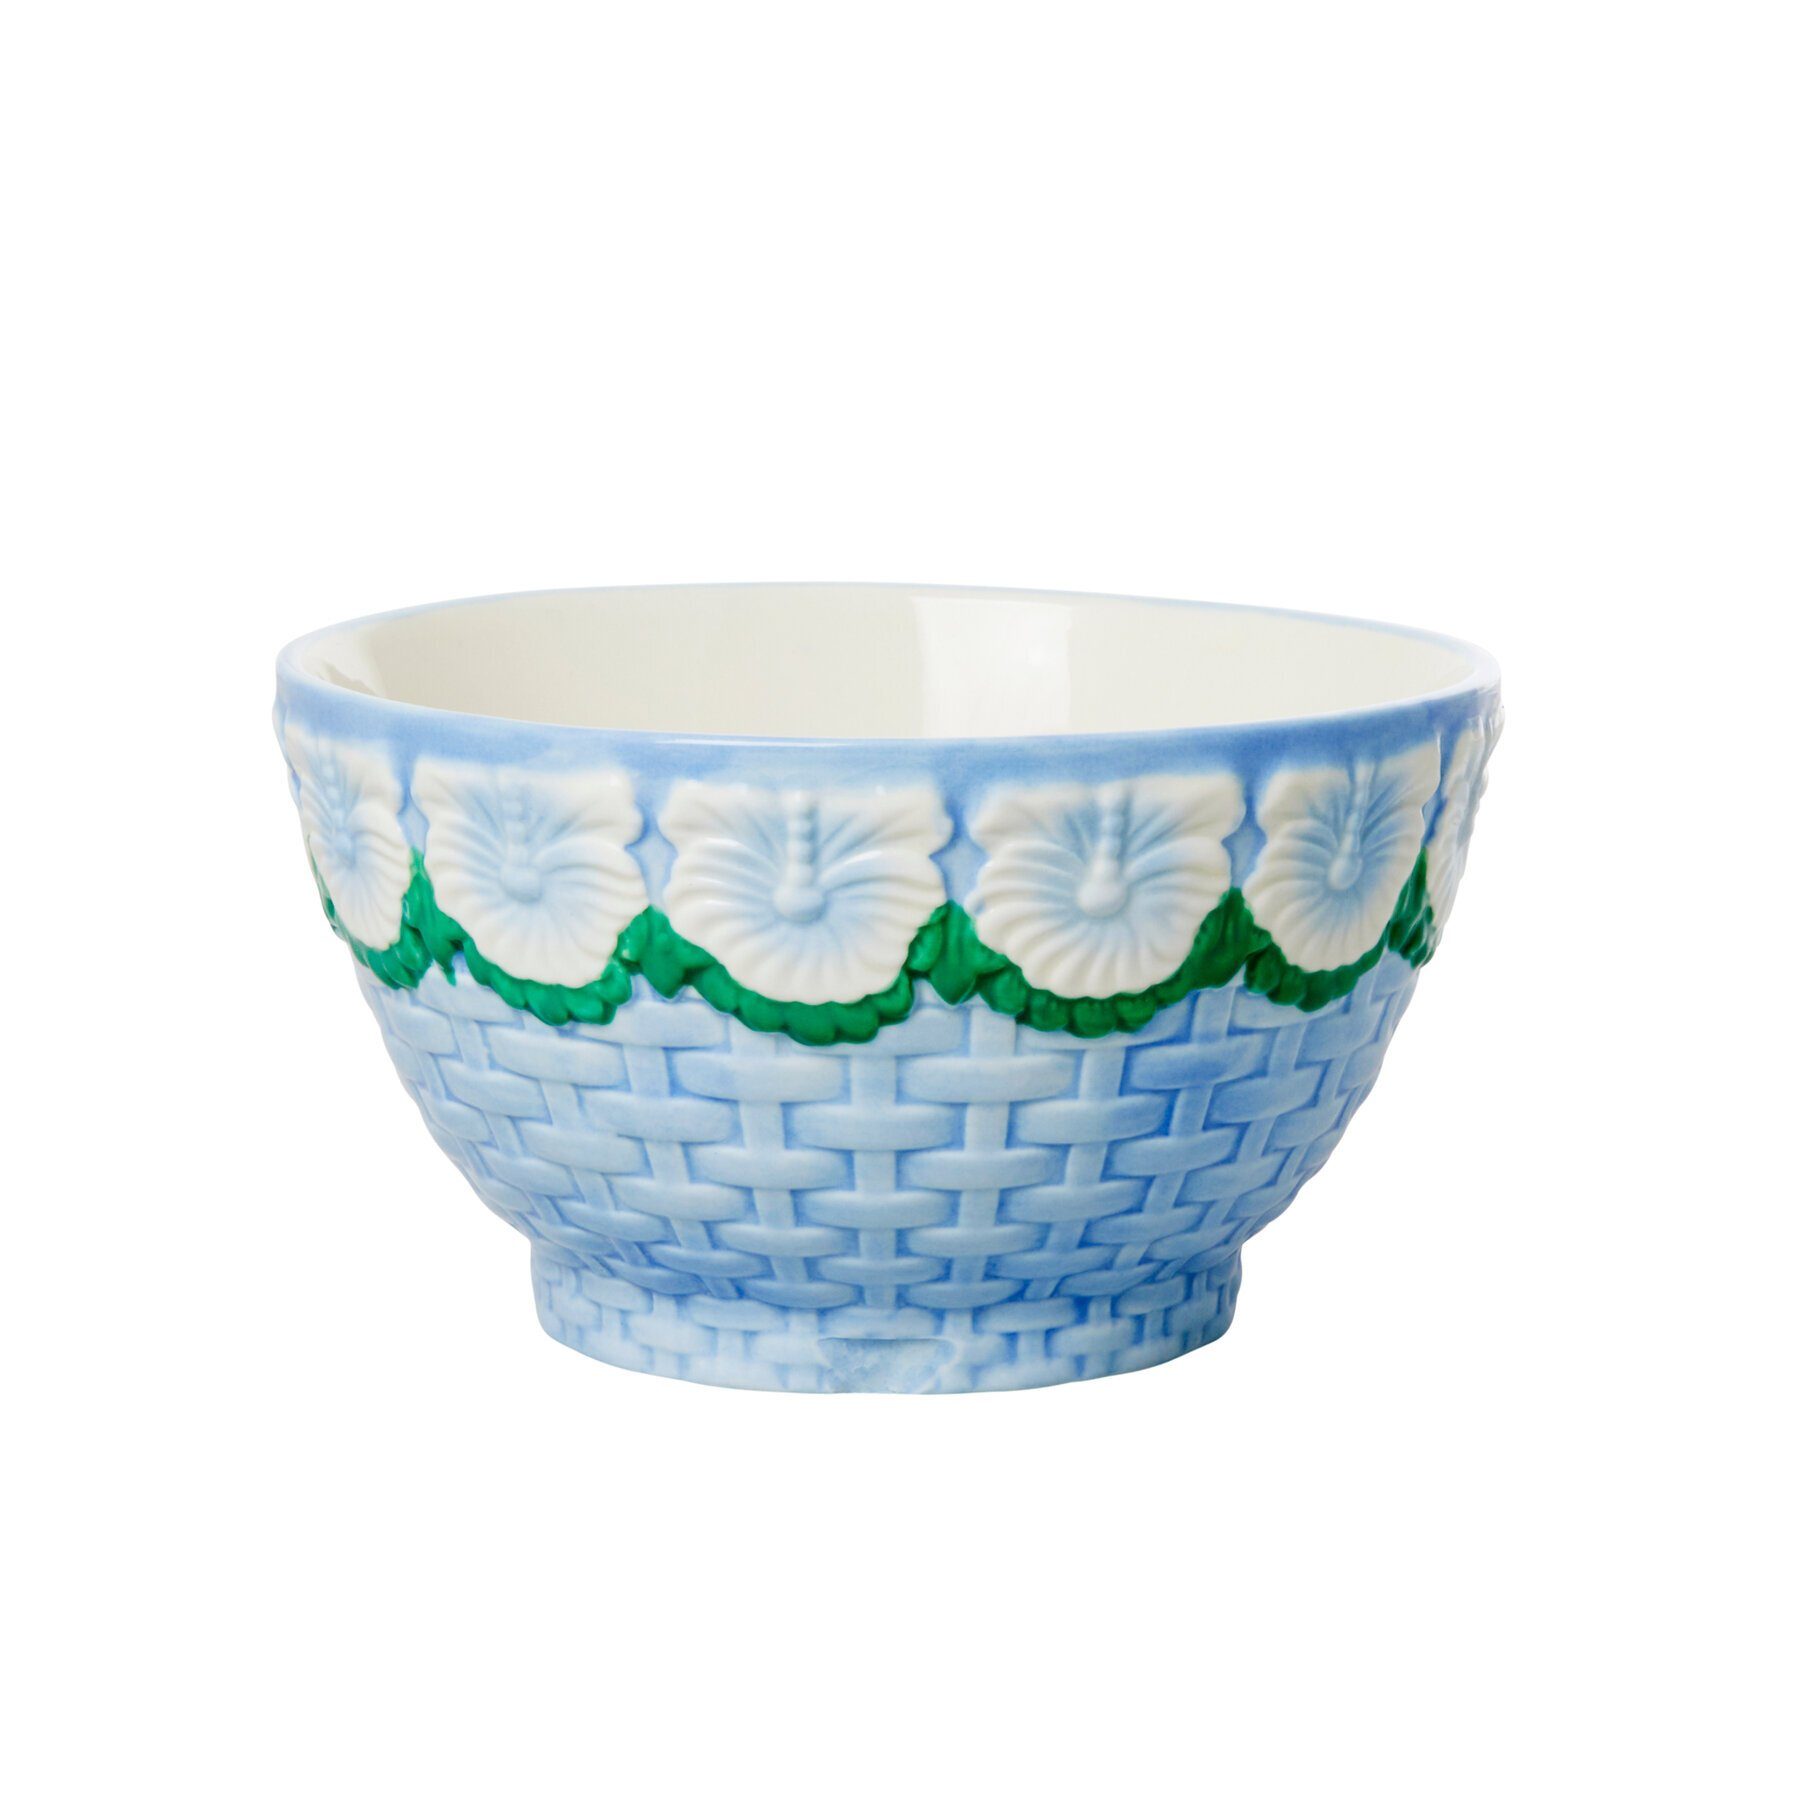 Medium, rice Keramik Schüssel blau